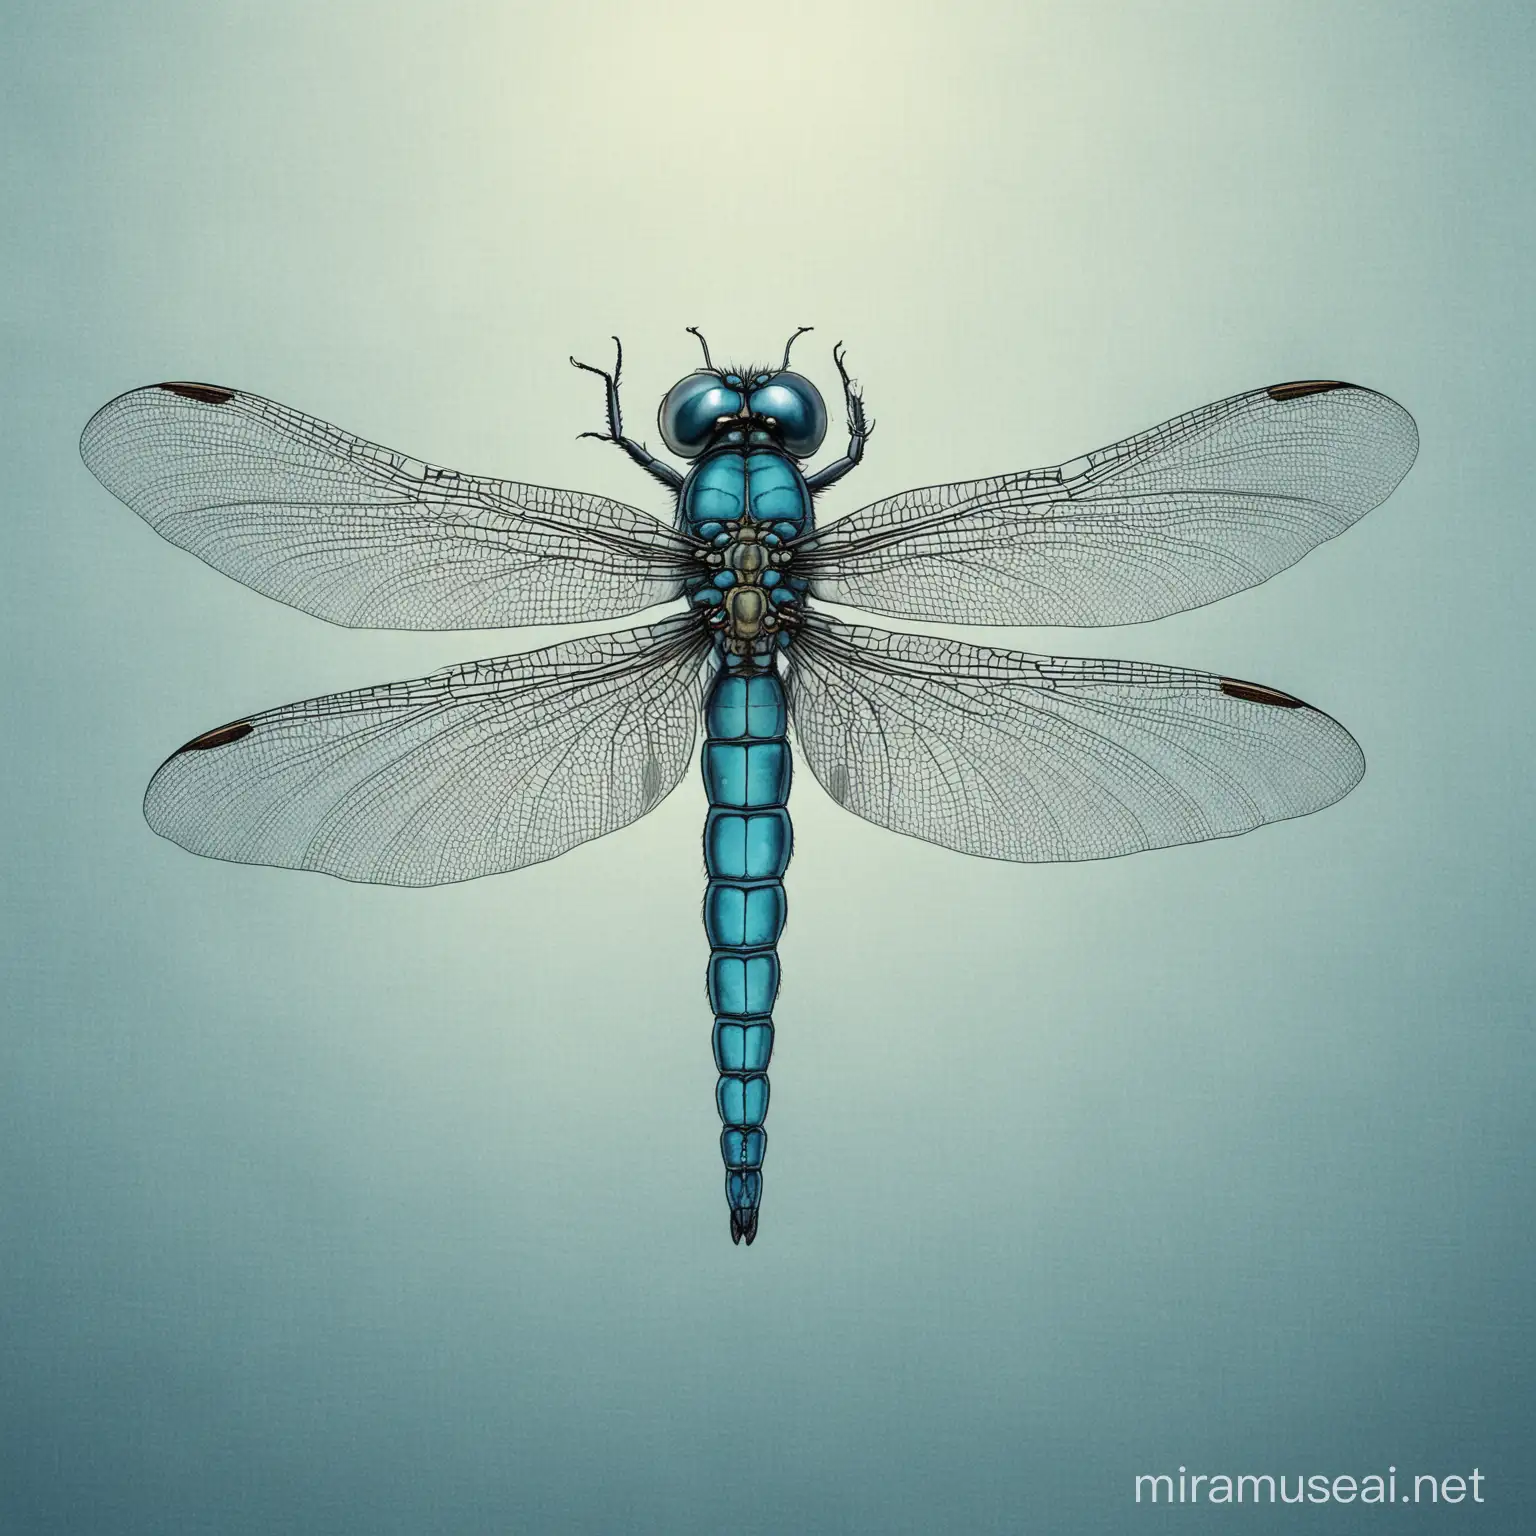 Ethereal Blue Dragonfly Illustration